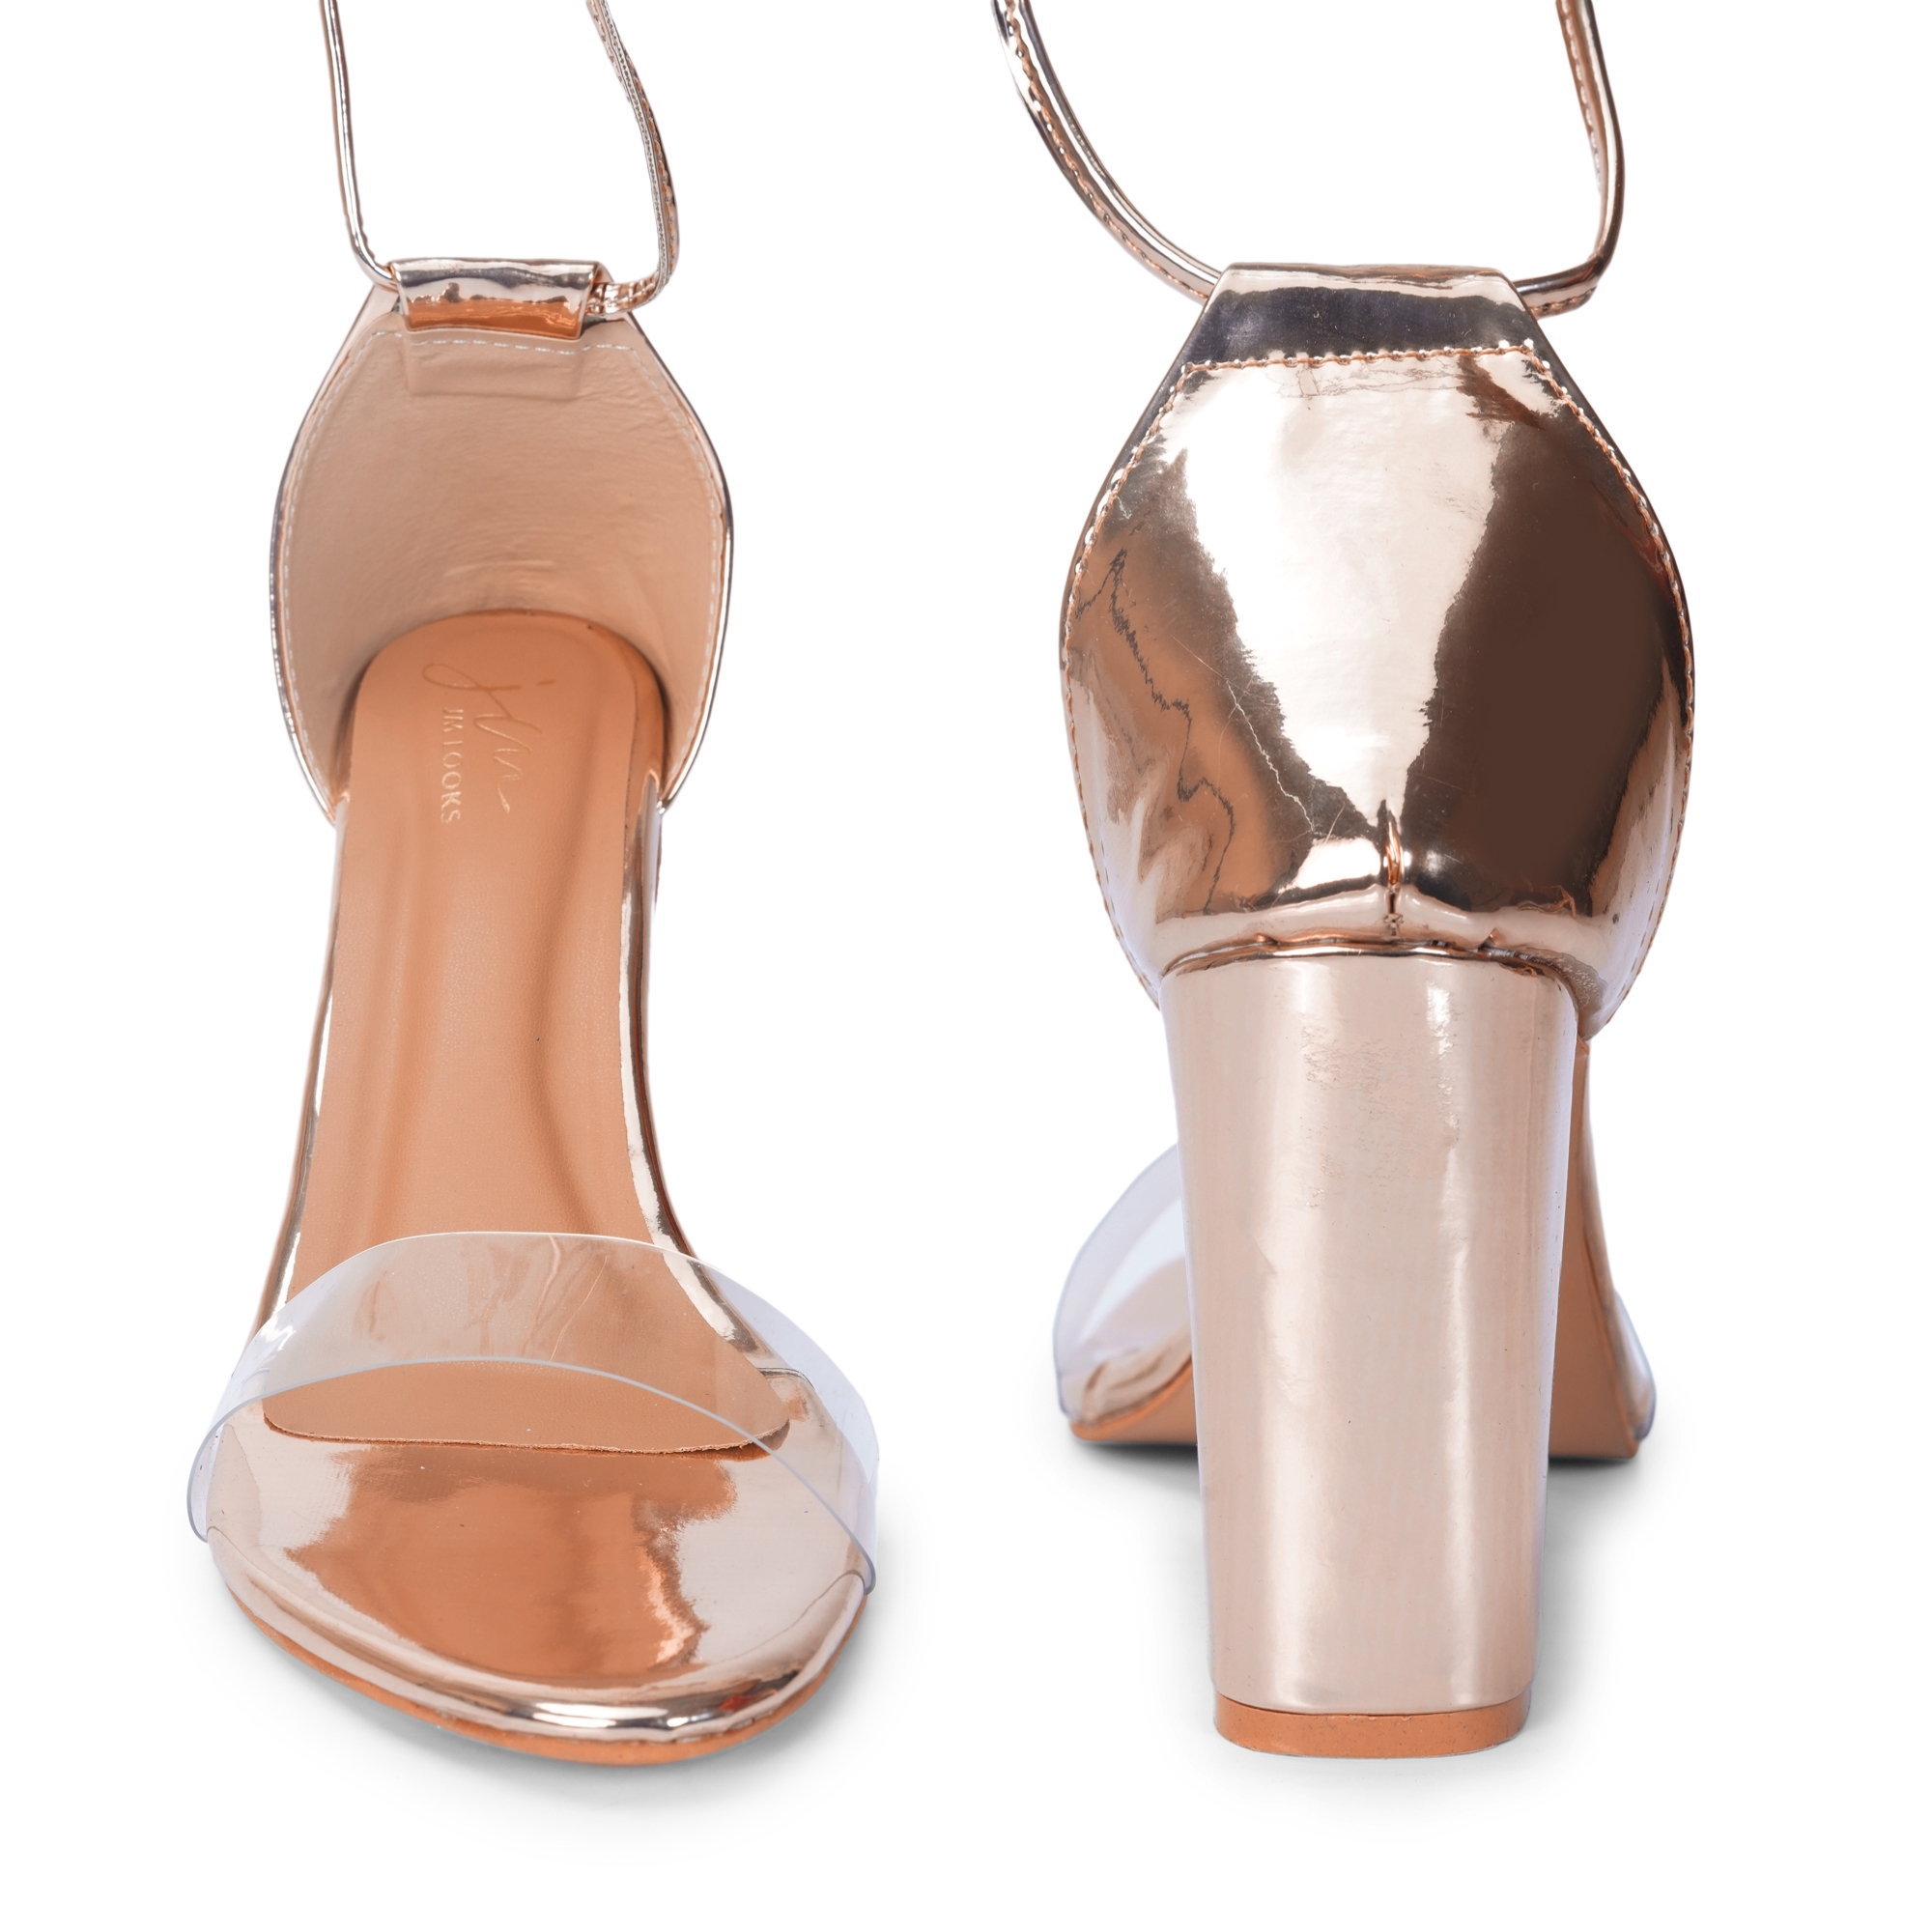 JM LOOKS | JM LOOKS Transparent & Rose Gold  Block Heels Sandal Comfortable Stylish Casual and Party  5